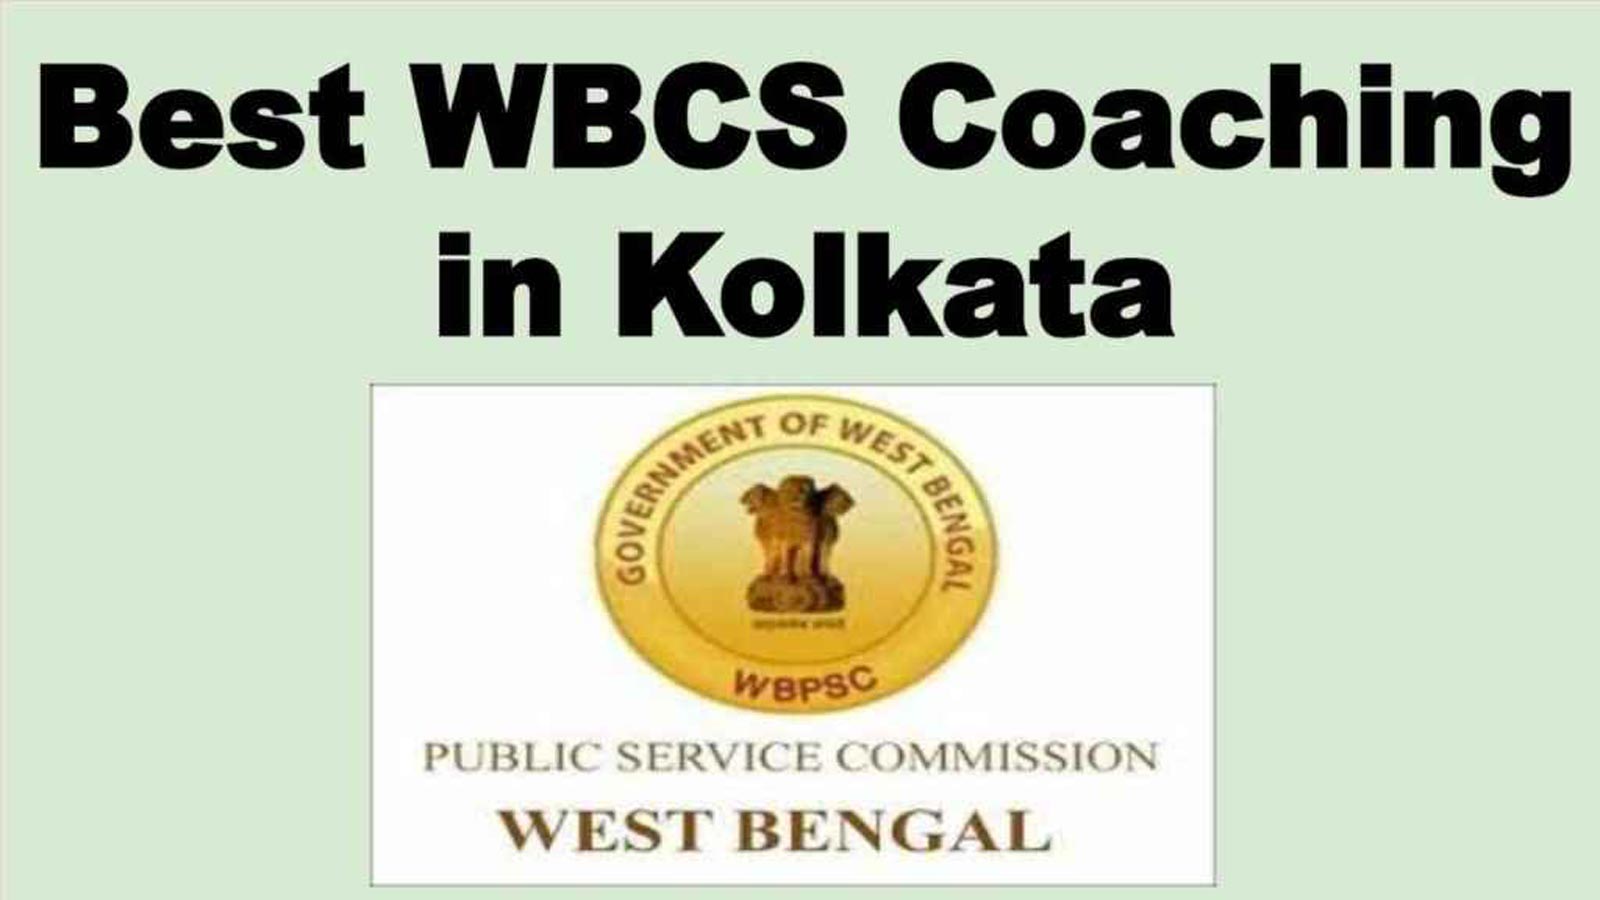 Top WBCS Coaching in Kolkata